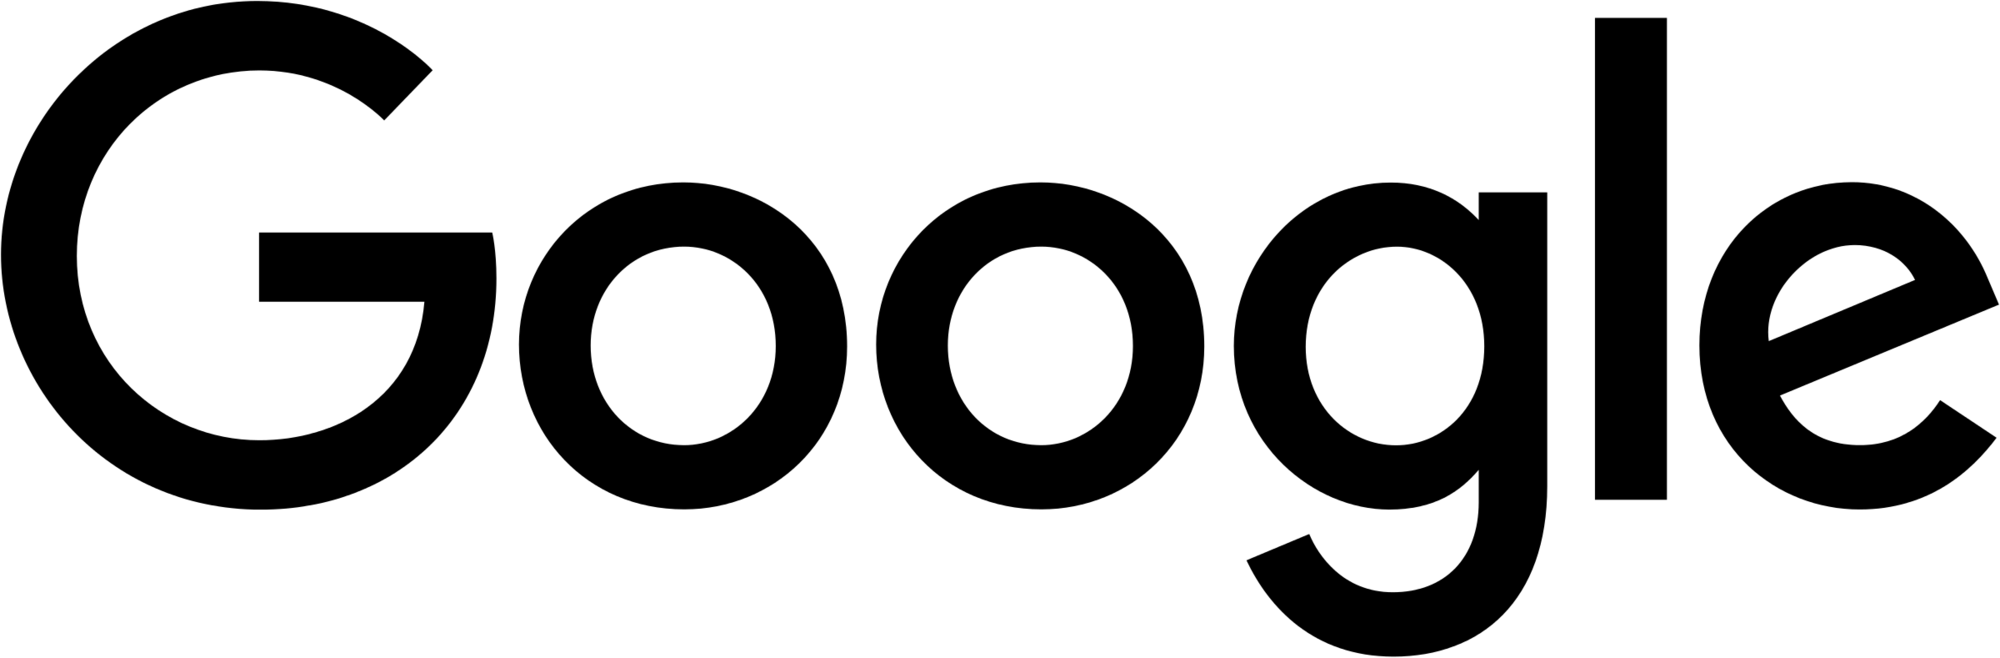 Black and White Google Logo - Google logo in black and white